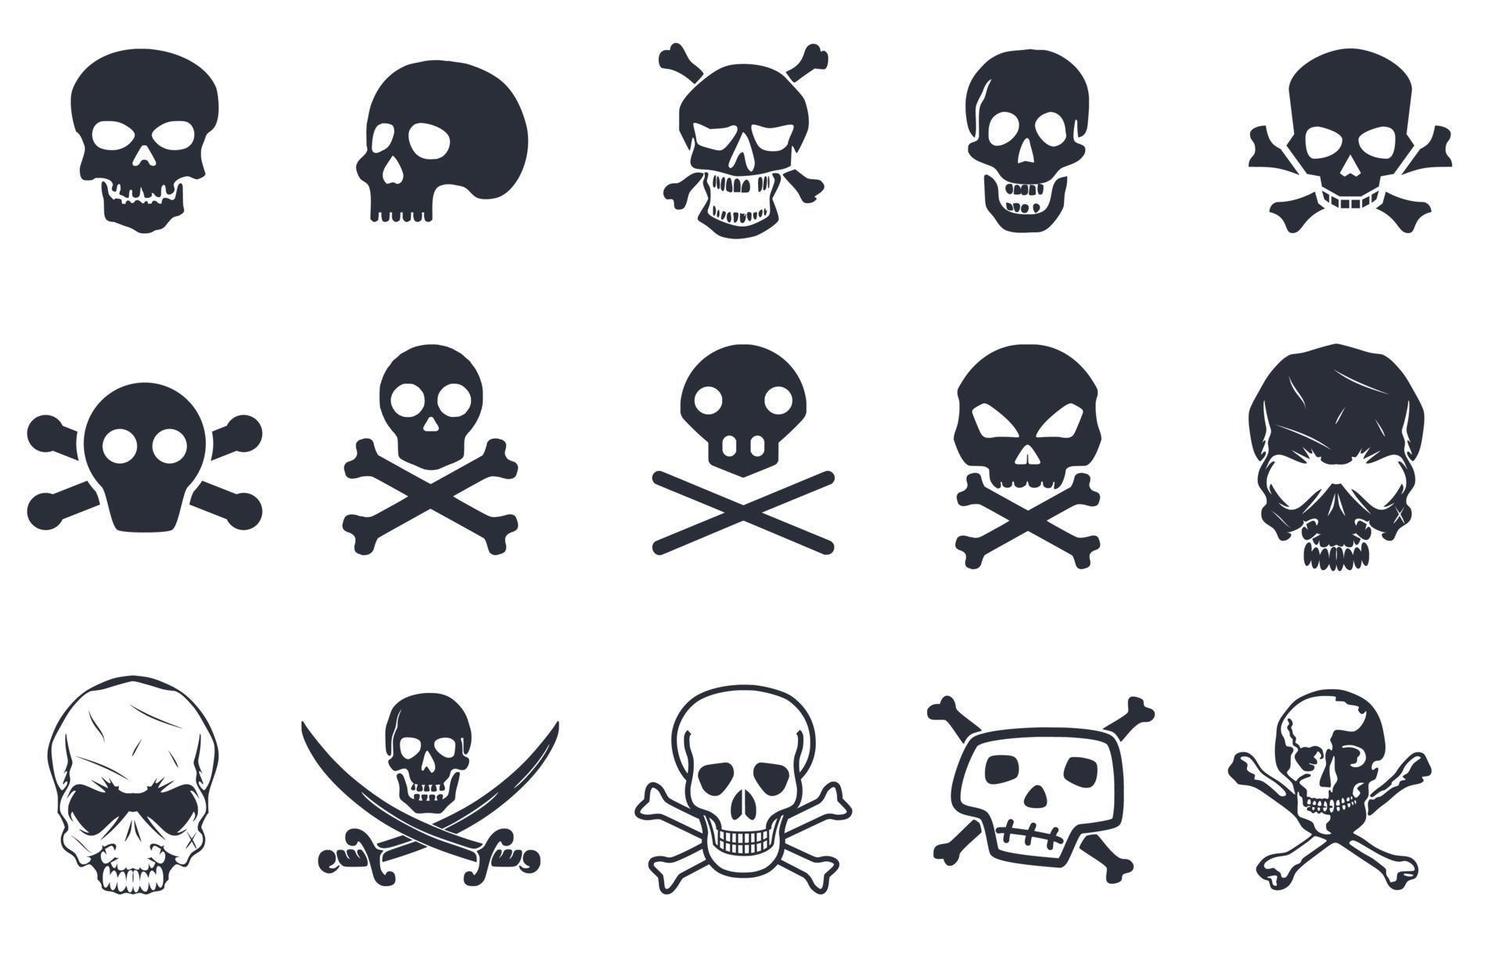 scheletri. grande set di teschi, ossa e simboli dei pirati. 15 sagome di teschi e ossa in un set. vettore